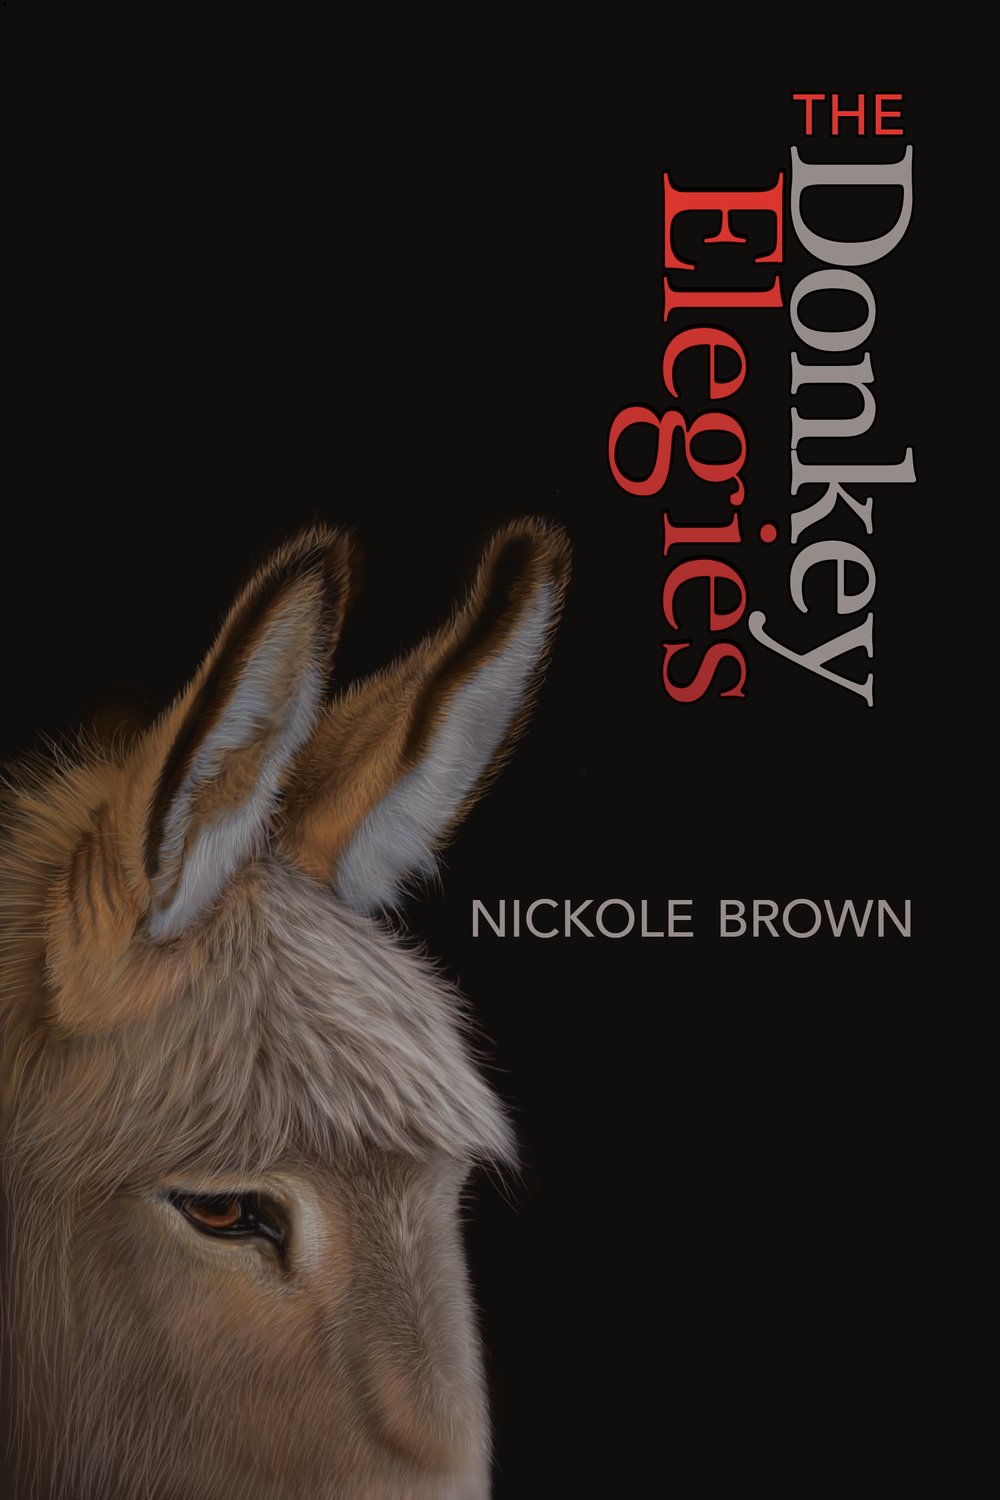 The Donkey Elegies by Nickole Brown